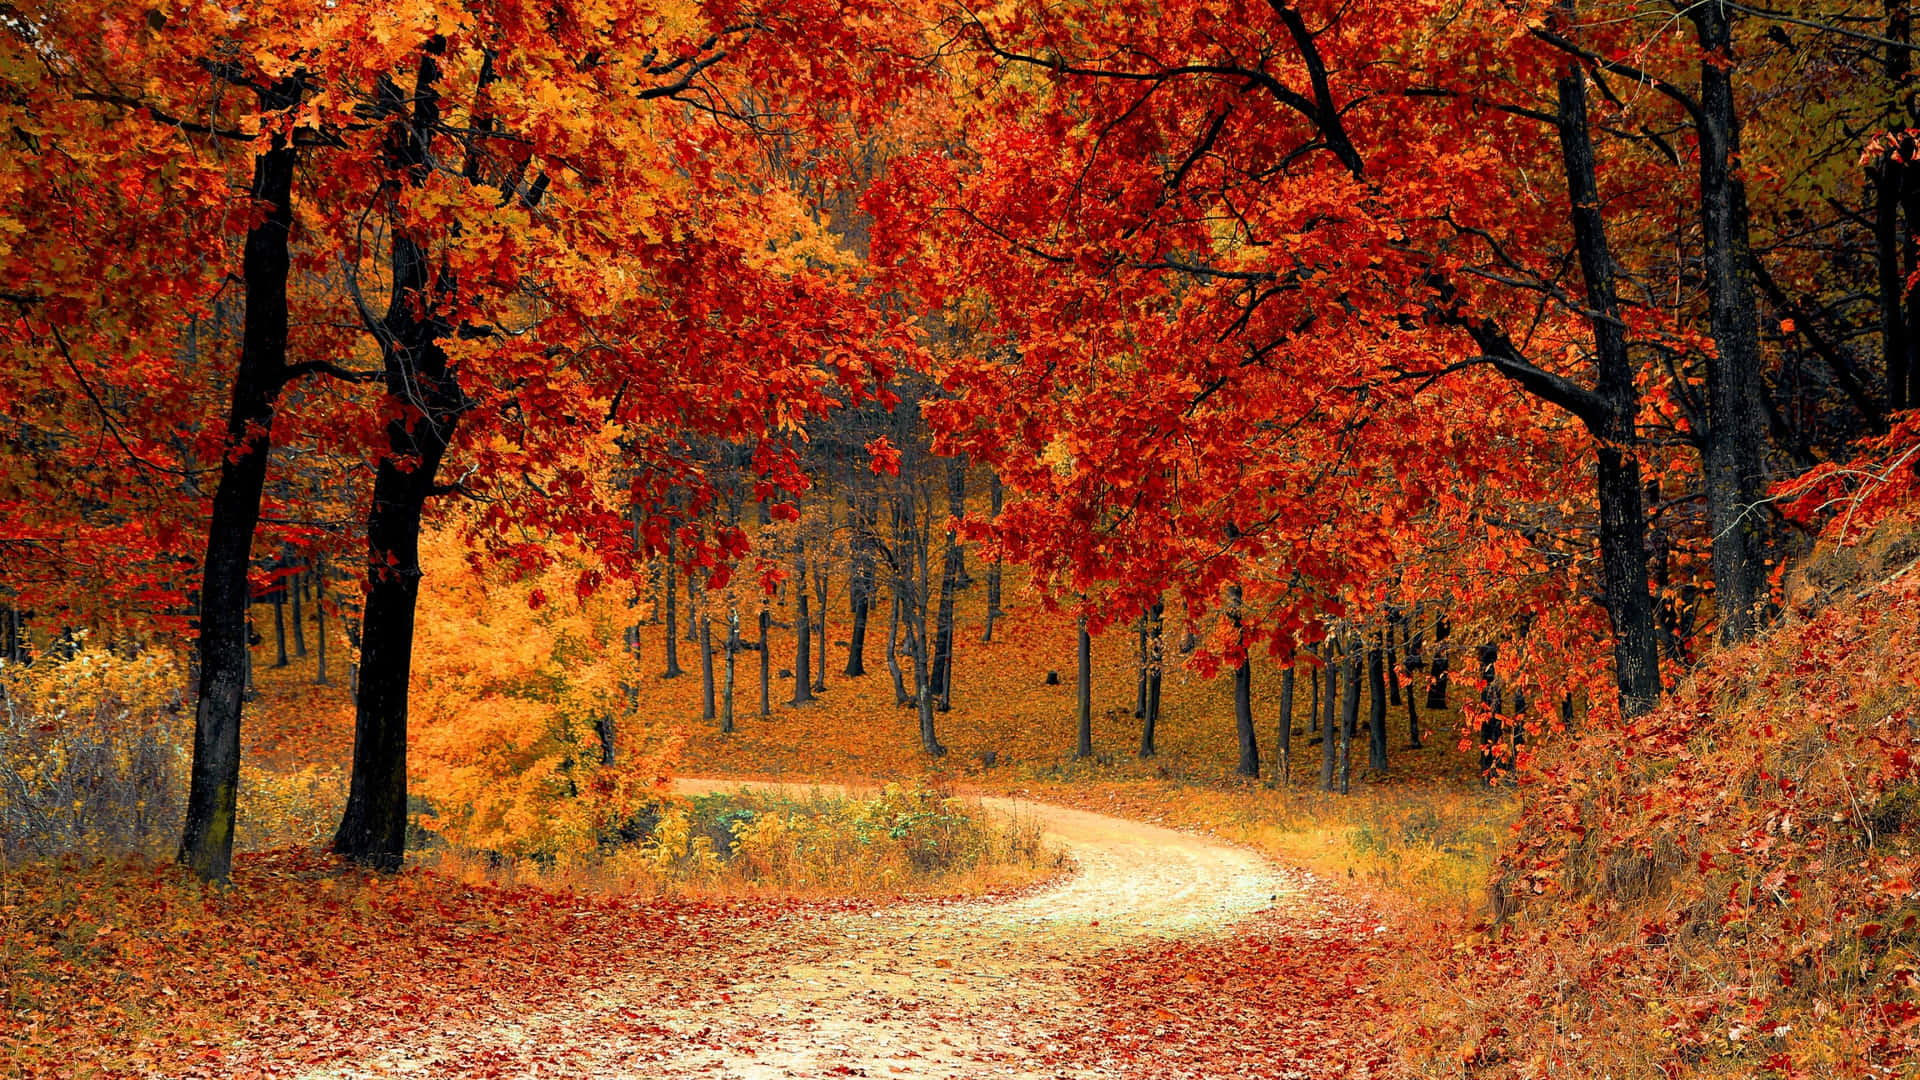 Enjoy the Season of Change with Amazing 4k Fall Landscape Wallpaper